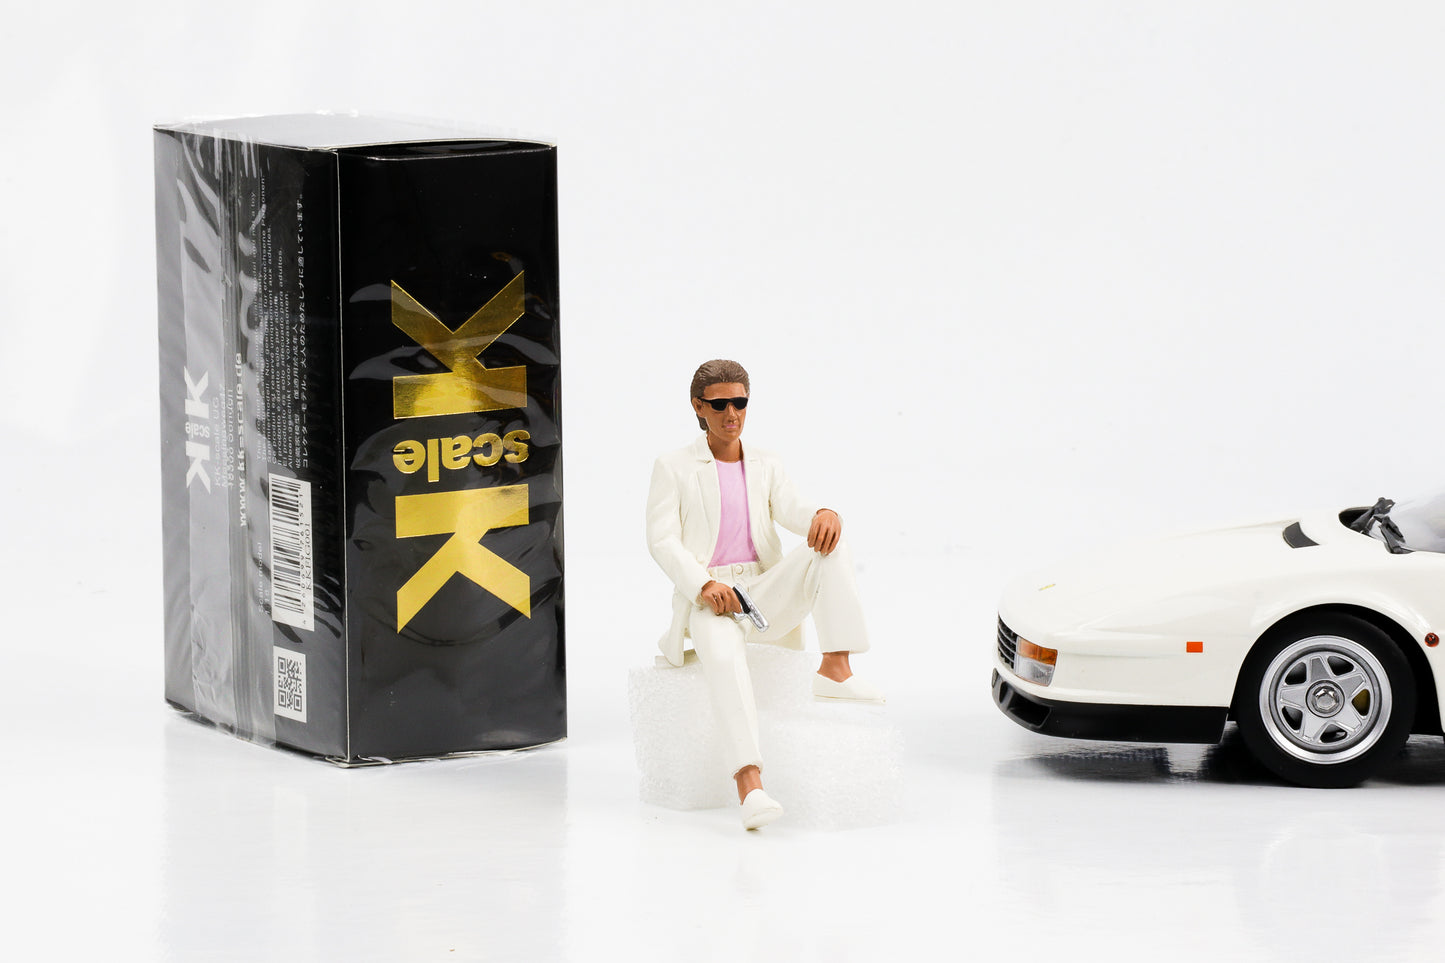 1:18 Ferrari Testarossa Monospecchio versão americana 1984 com figura Sonny Miami Vice Movie escala KK